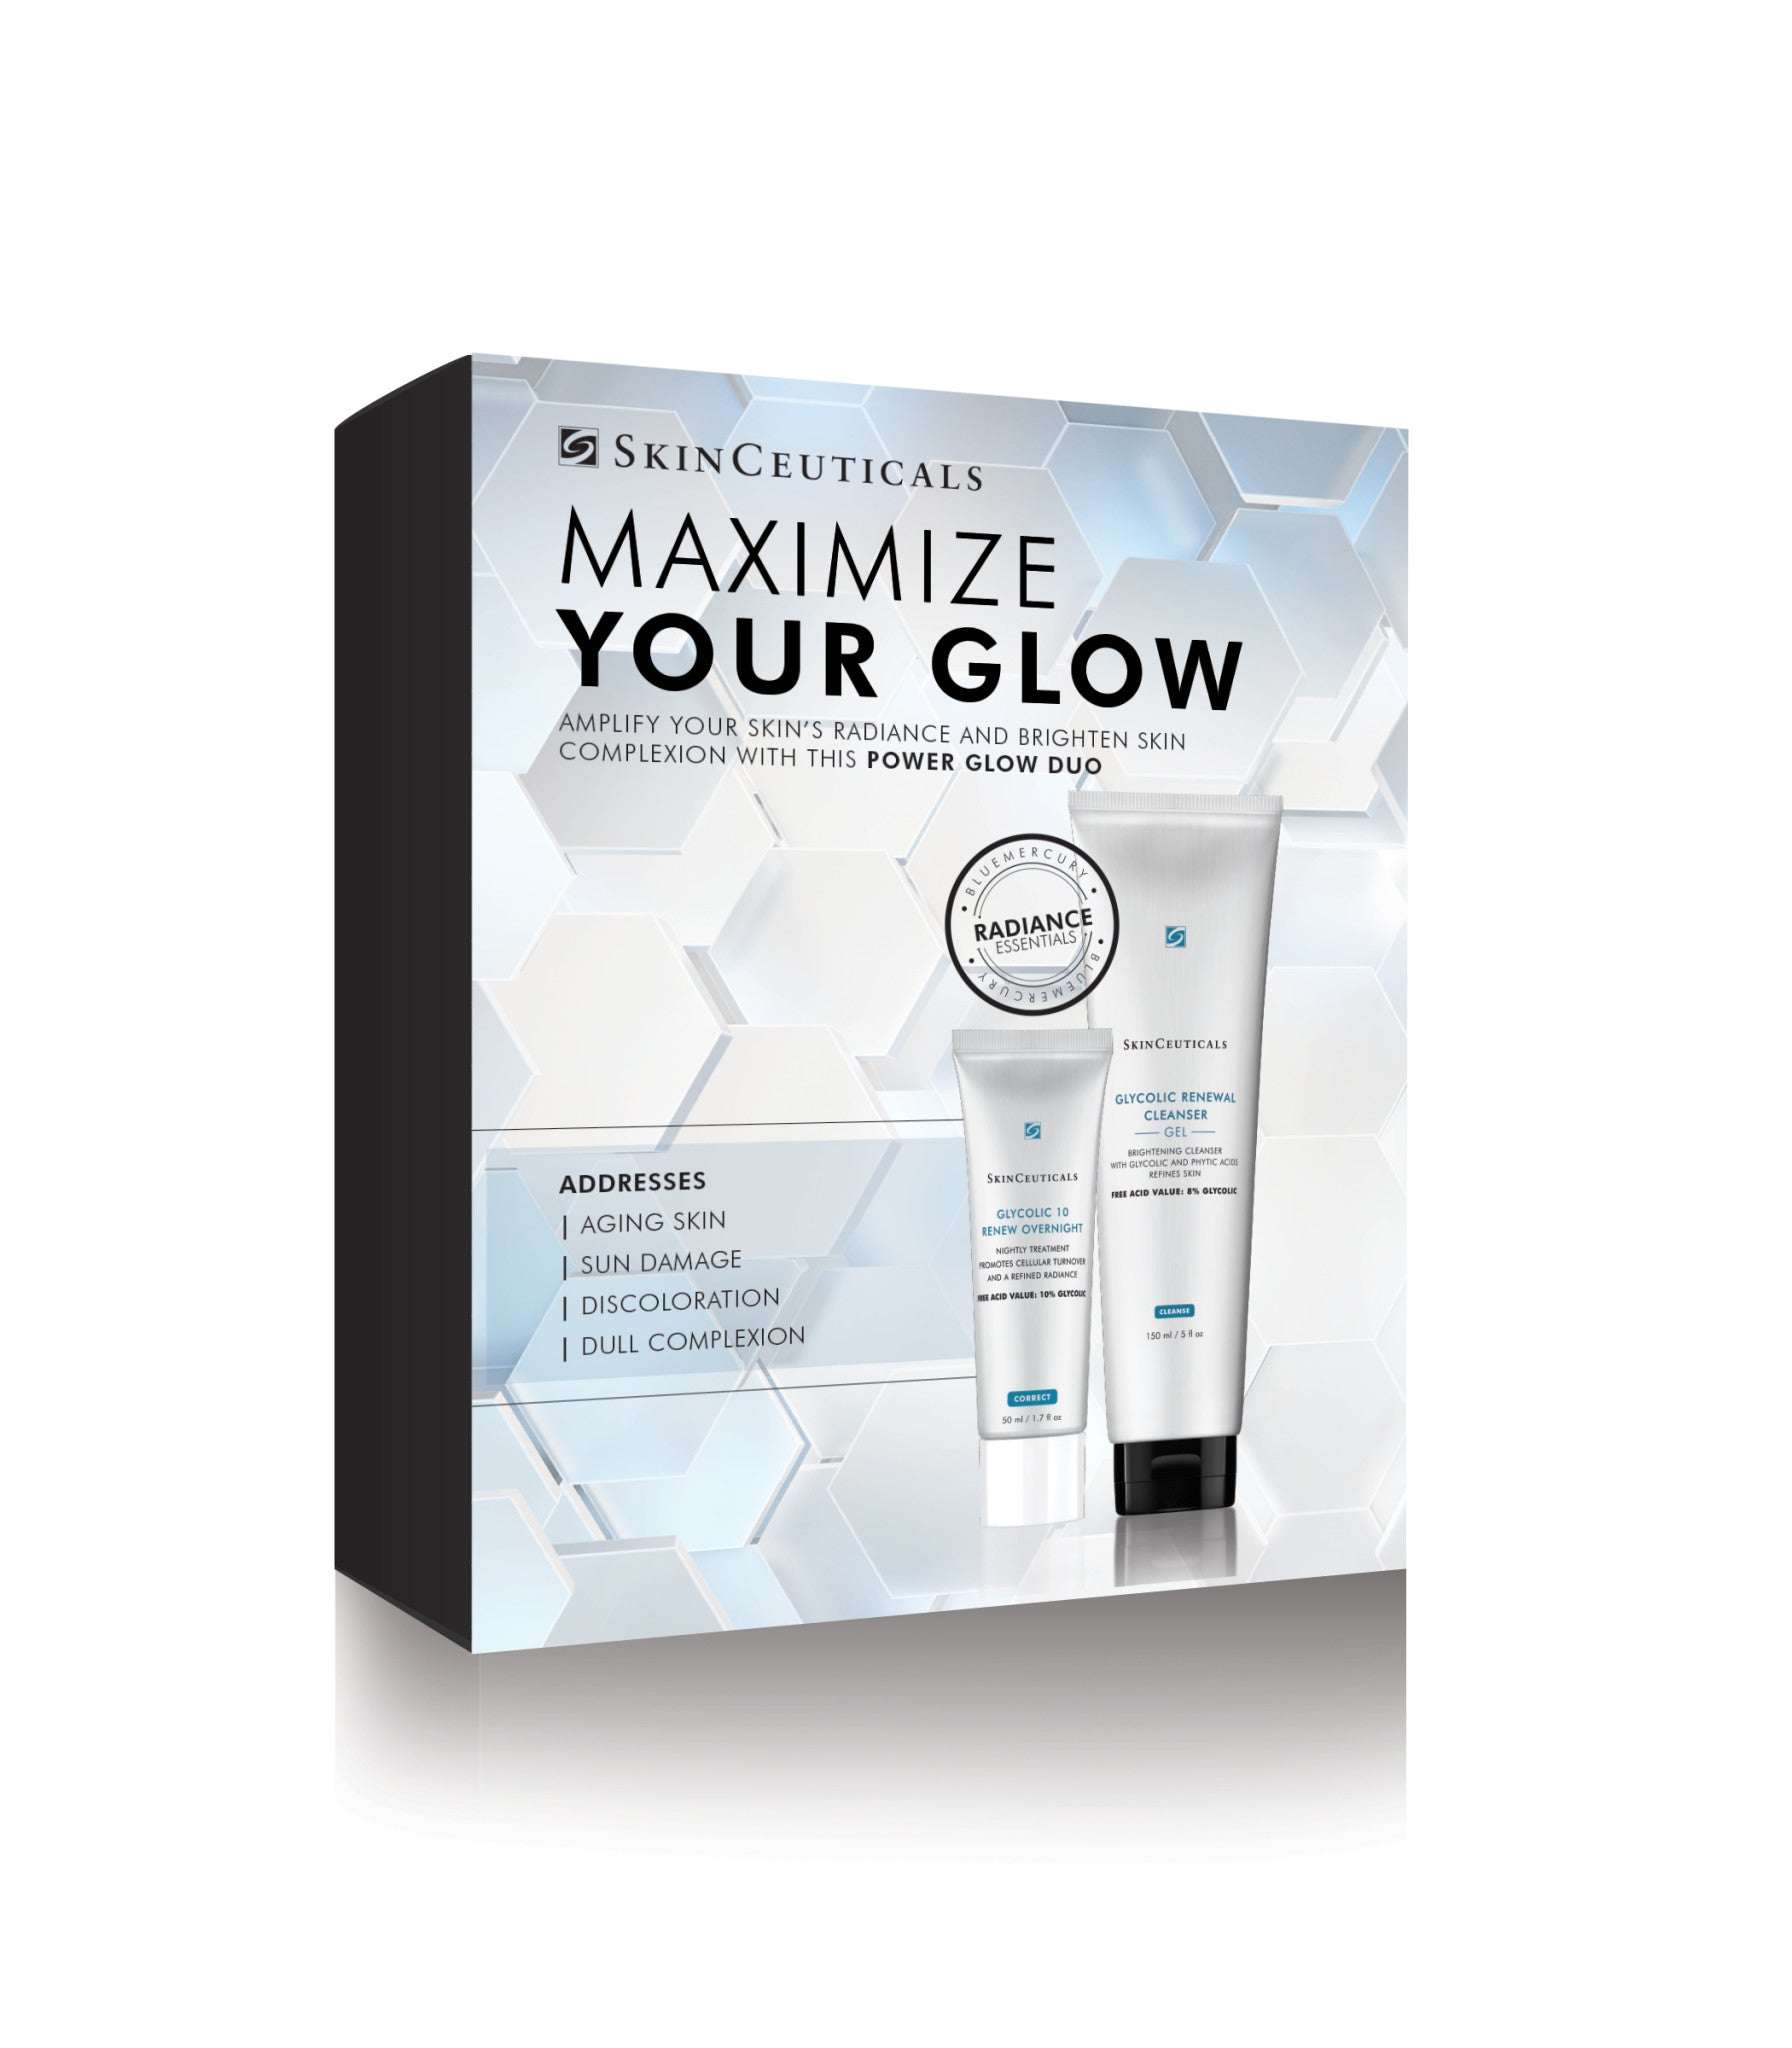 SkinCeuticals Maximize Your Glow Set main image.